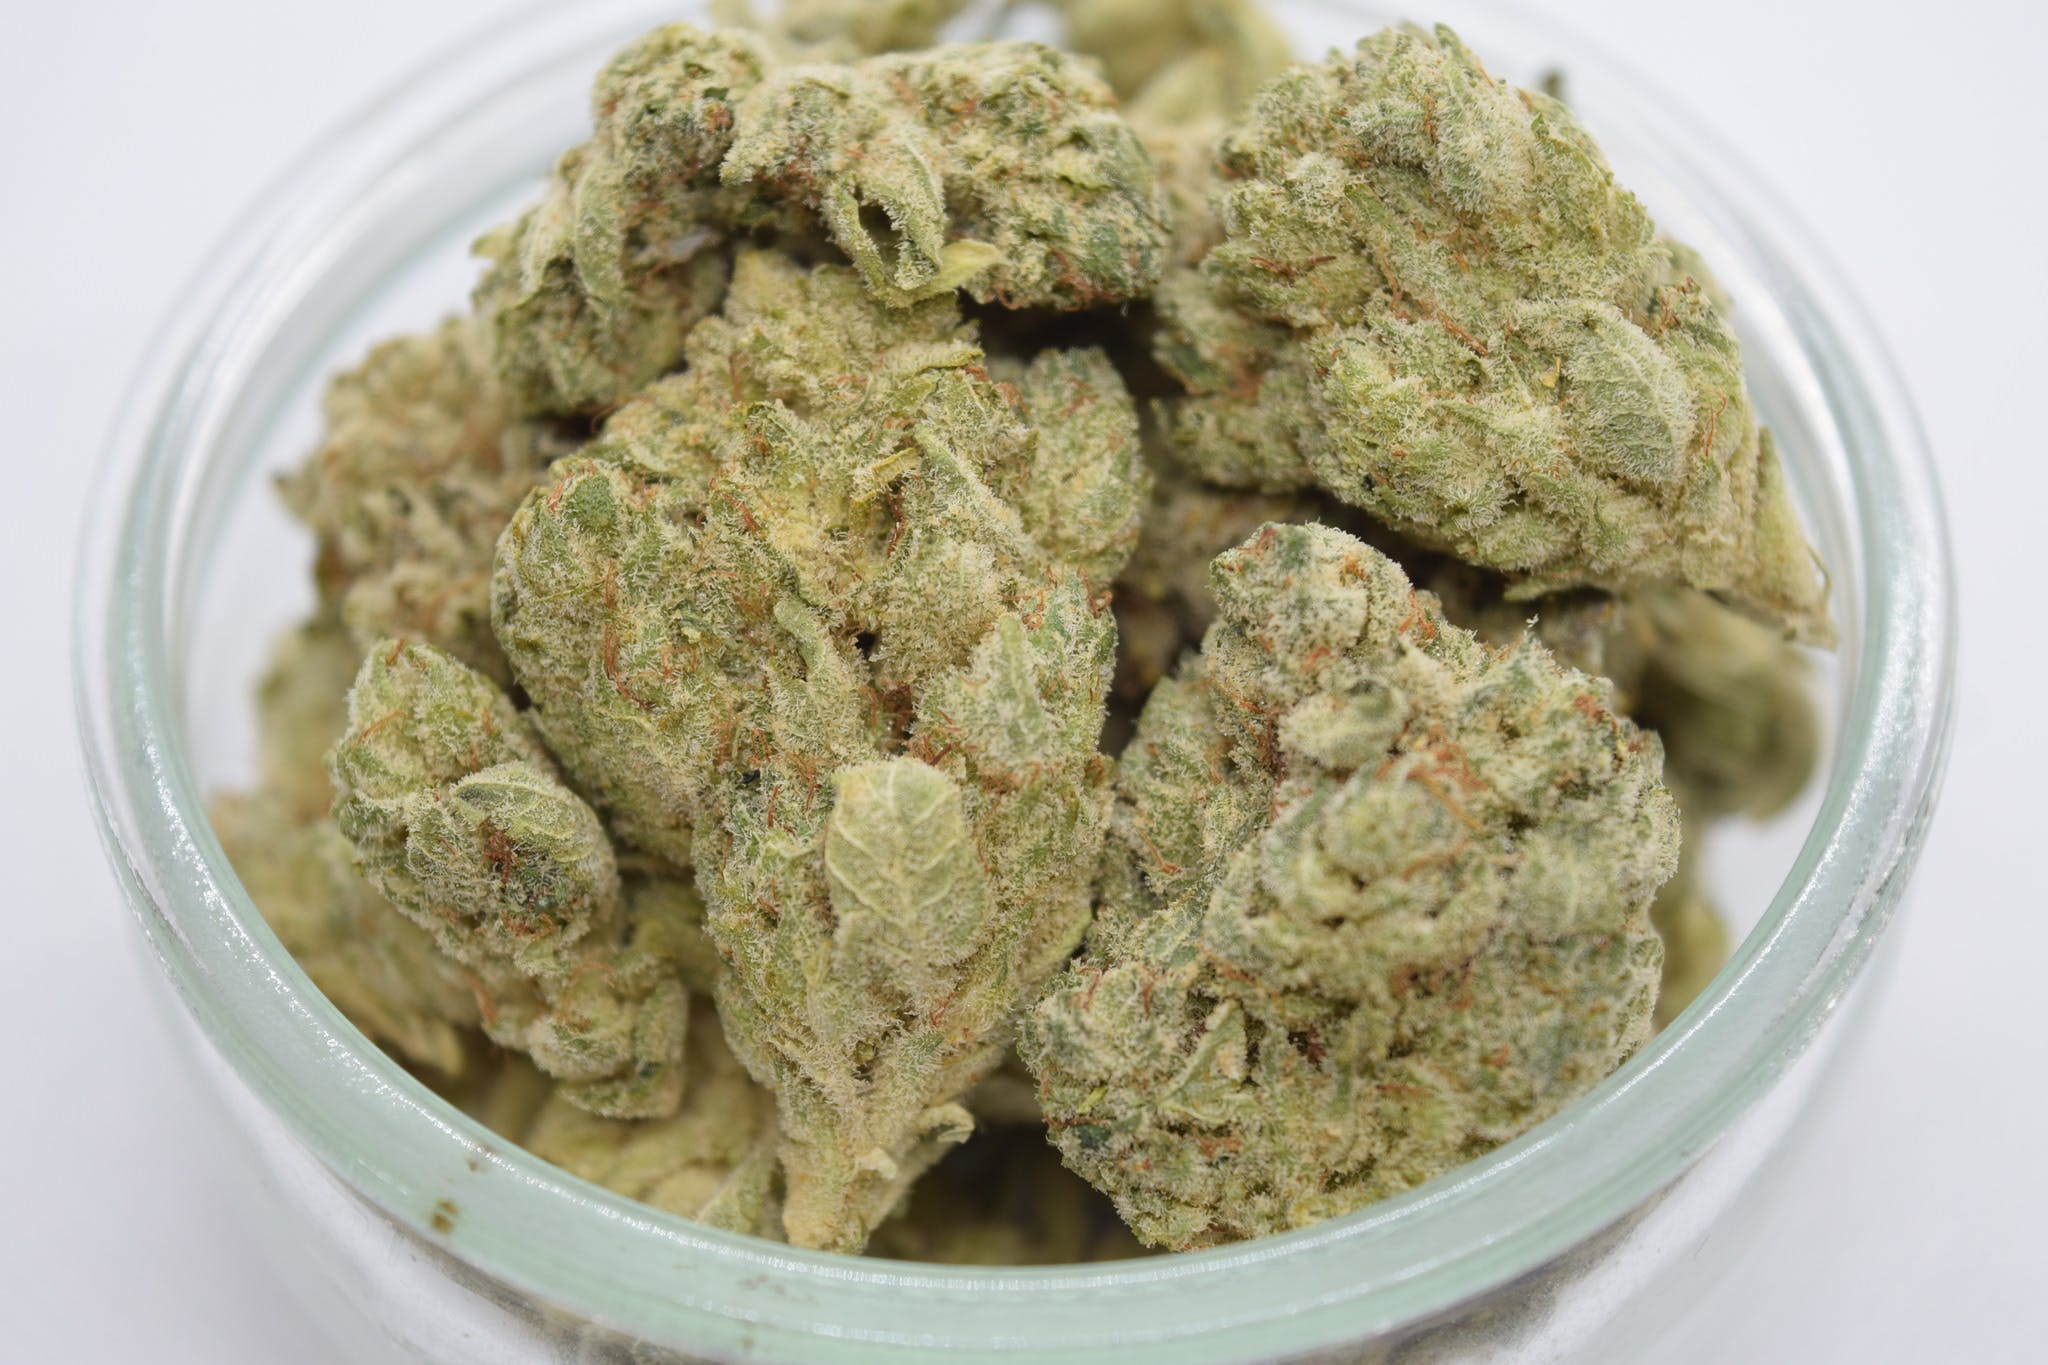 marijuana-dispensaries-golden-state-in-temecula-top-super-glue